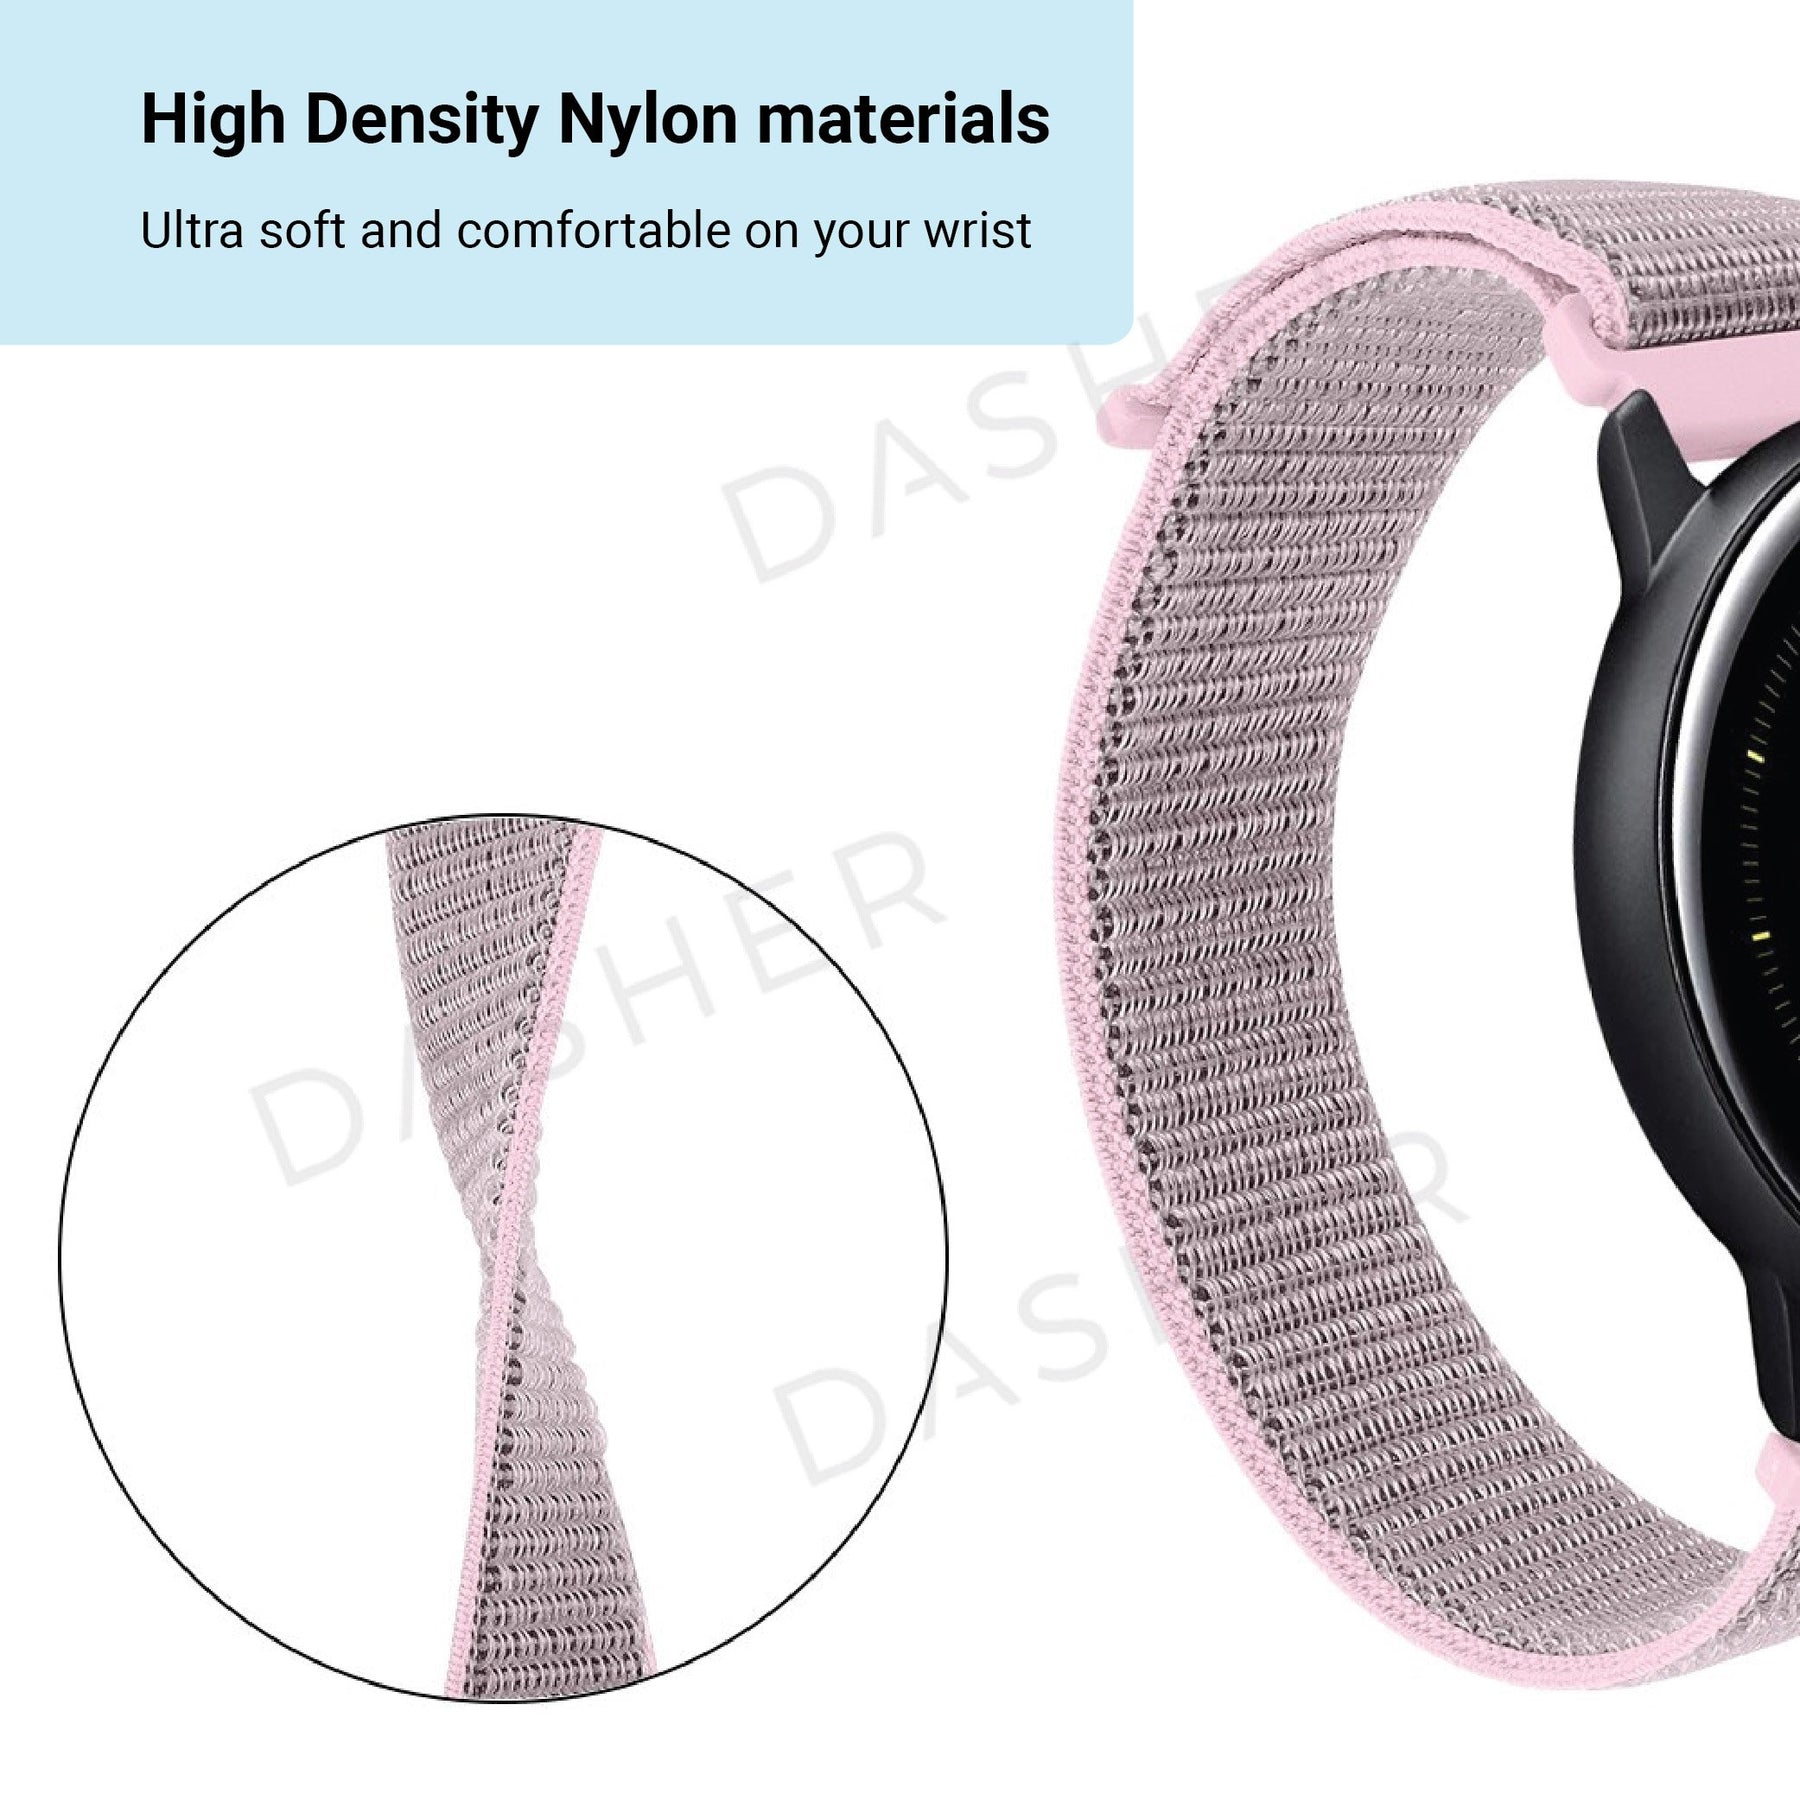 22mm Nylon Strap - Amazfit Smart Watch